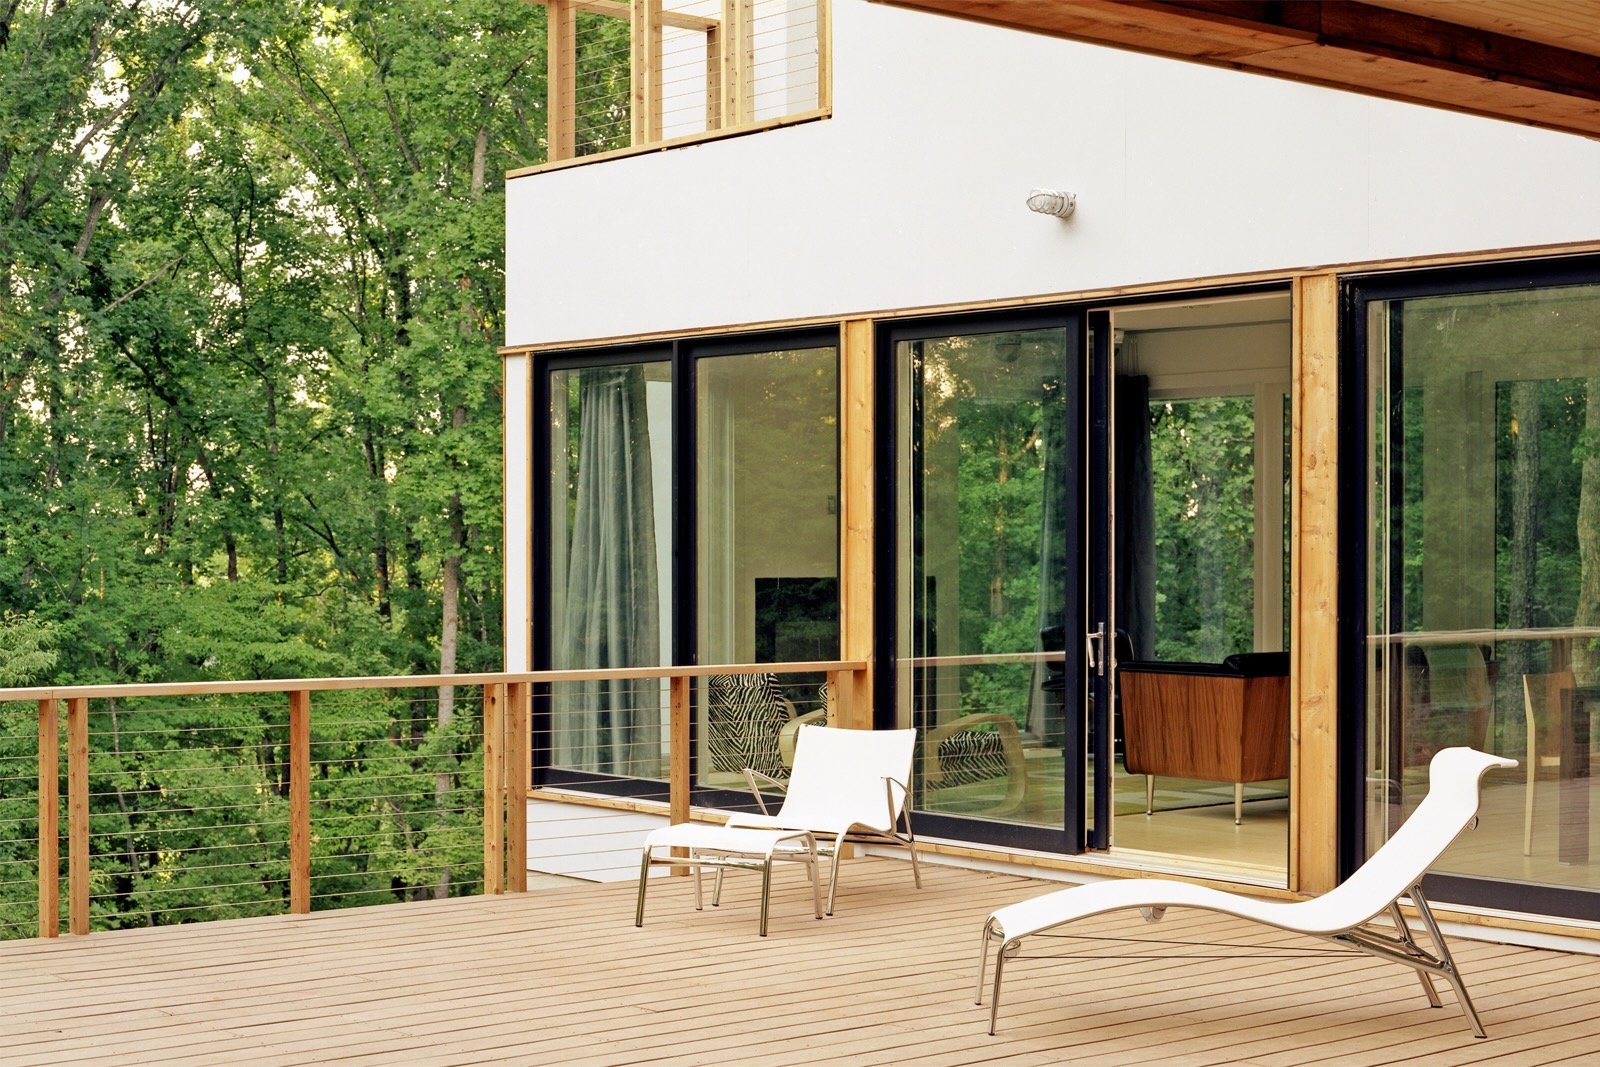 04-res4-resolution-4-architecture-modern-modular-prefab-home-dwell-exterior.jpeg